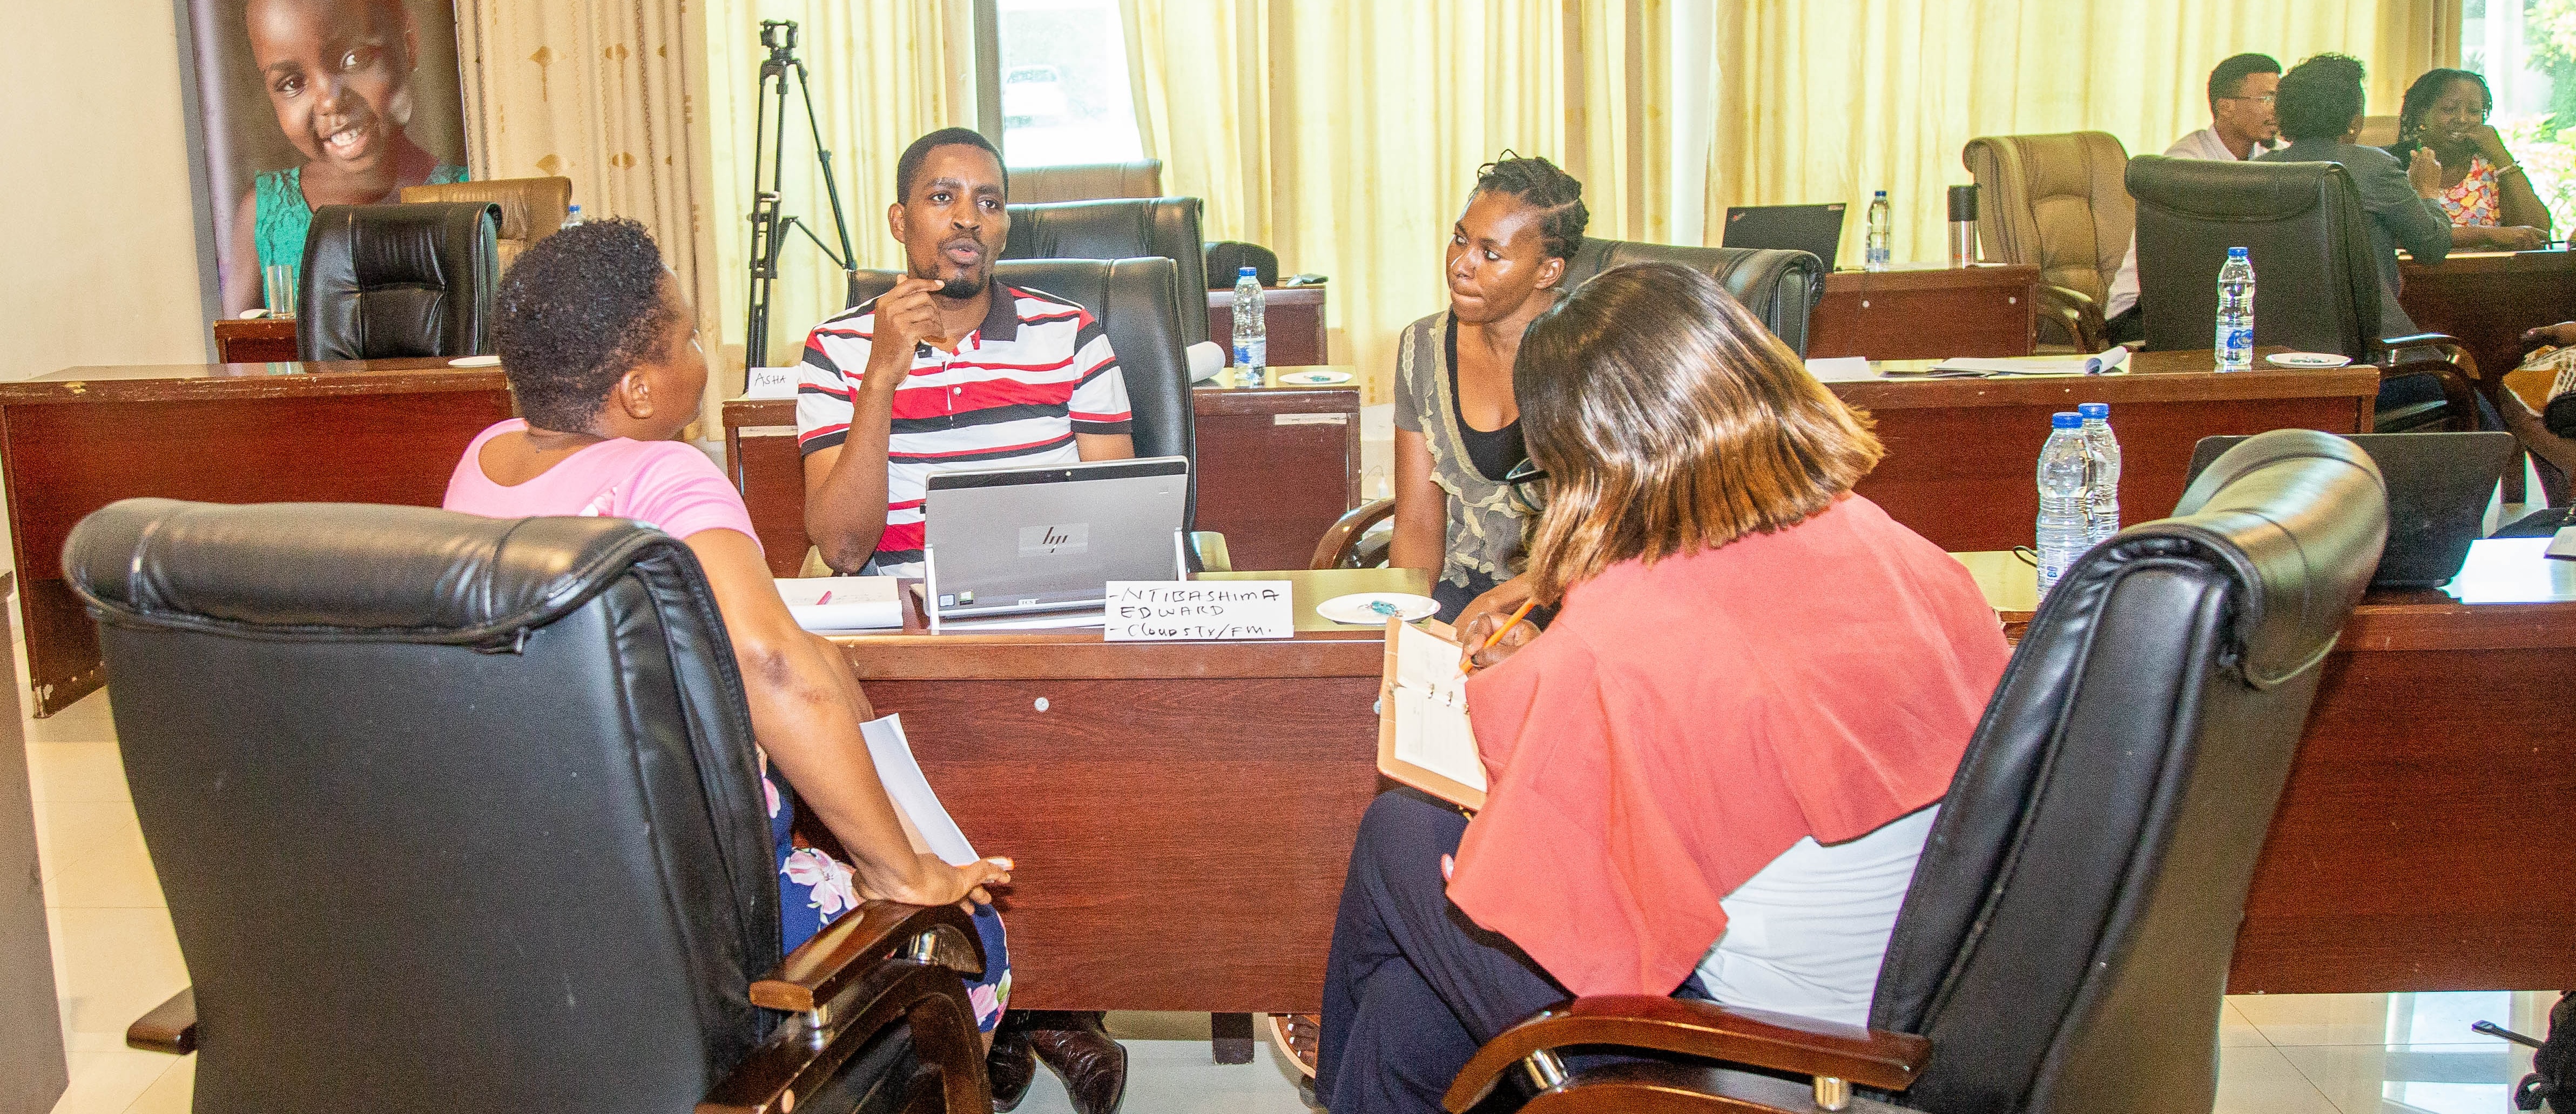 TRAINING - Ifakara, partners host “bridging science and journalism workshop”